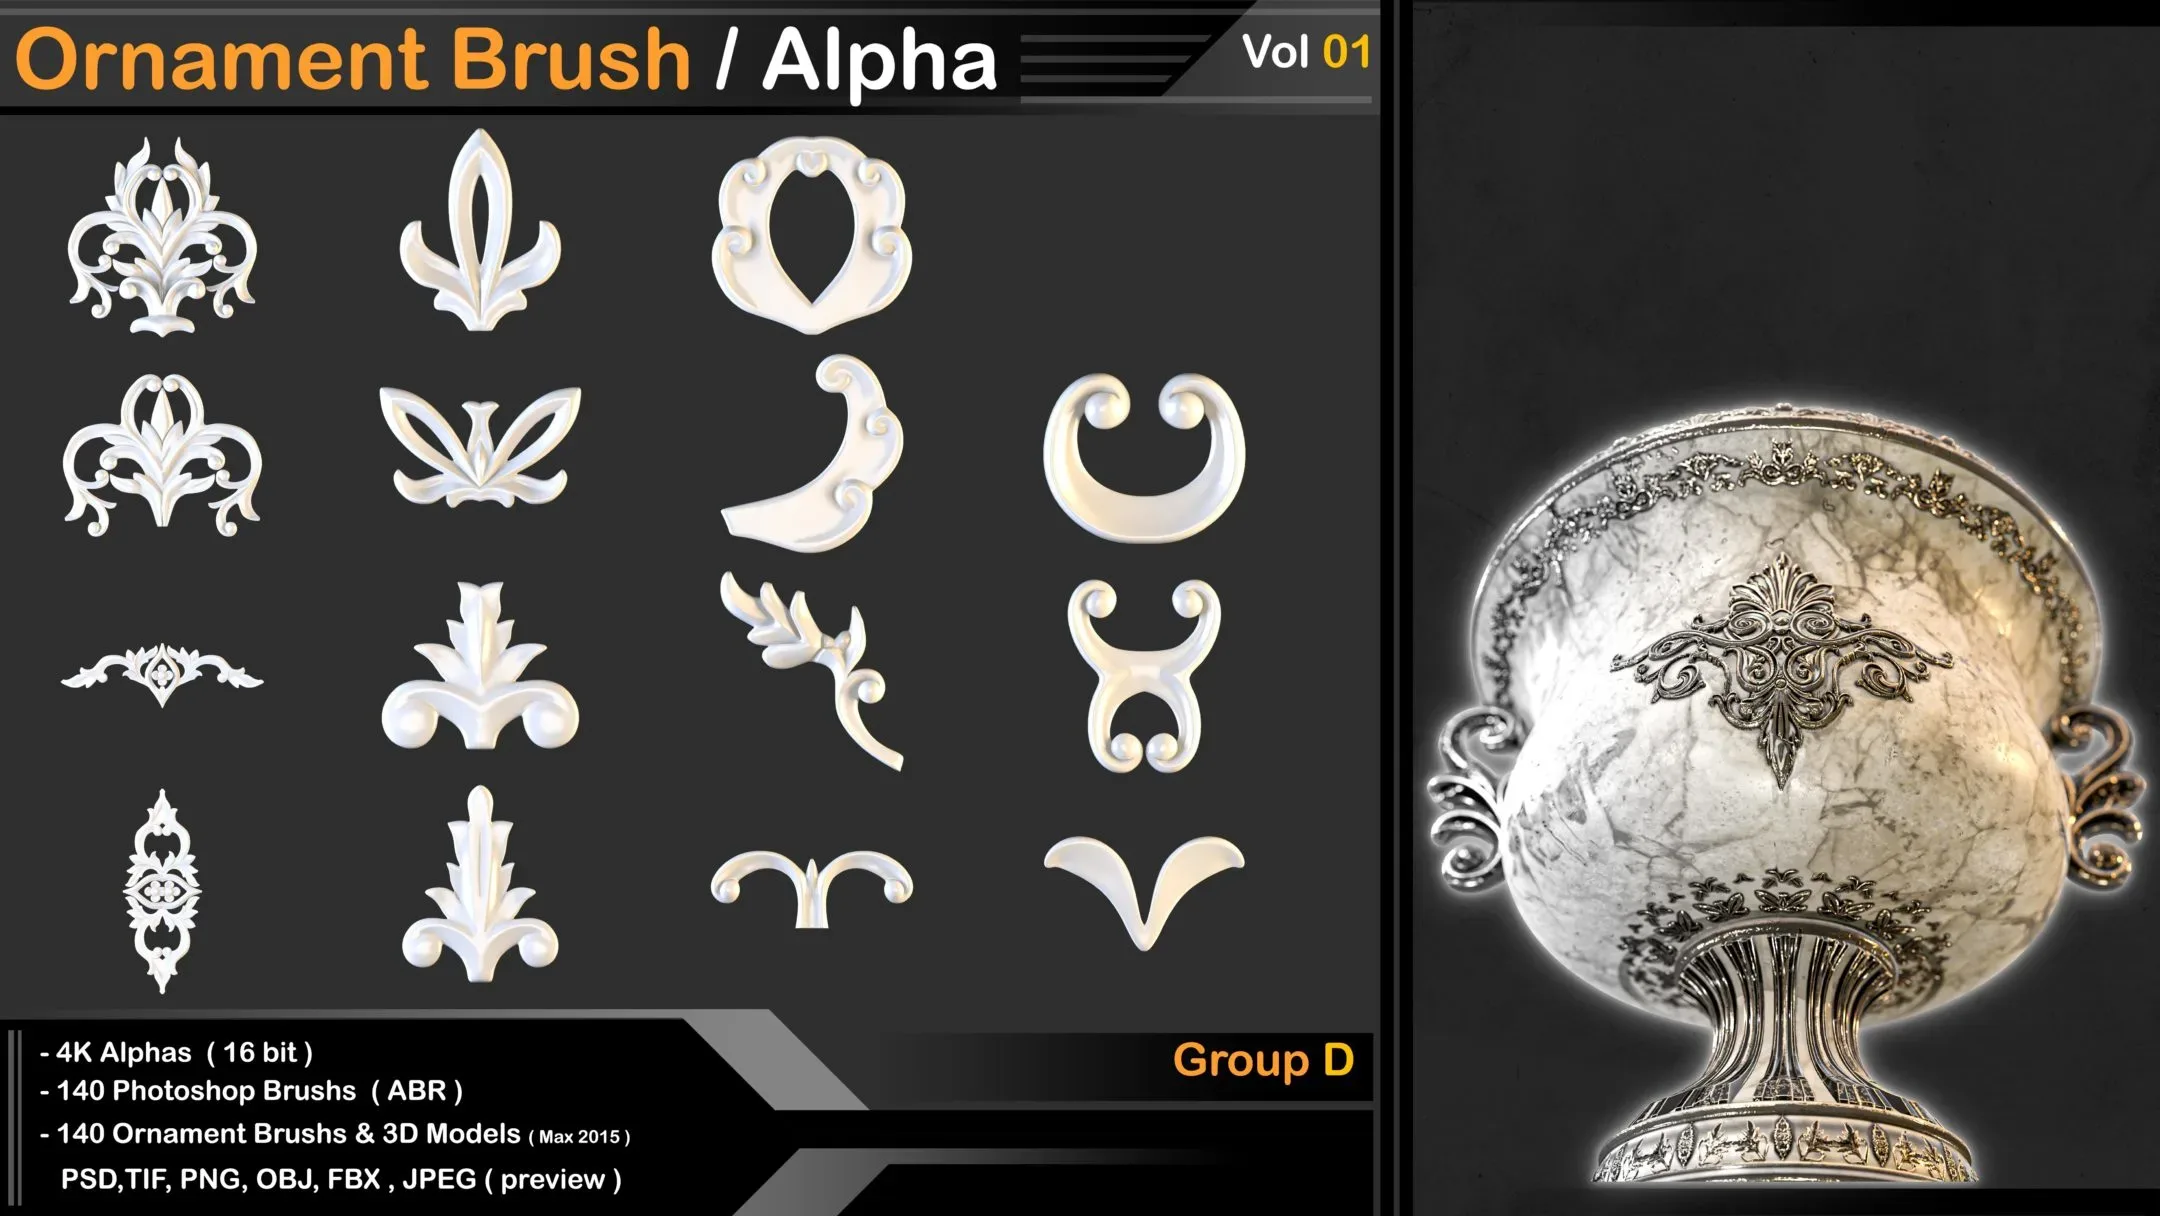 140 Ornament Brush + 3DModel + IMM Brush - VOL 01